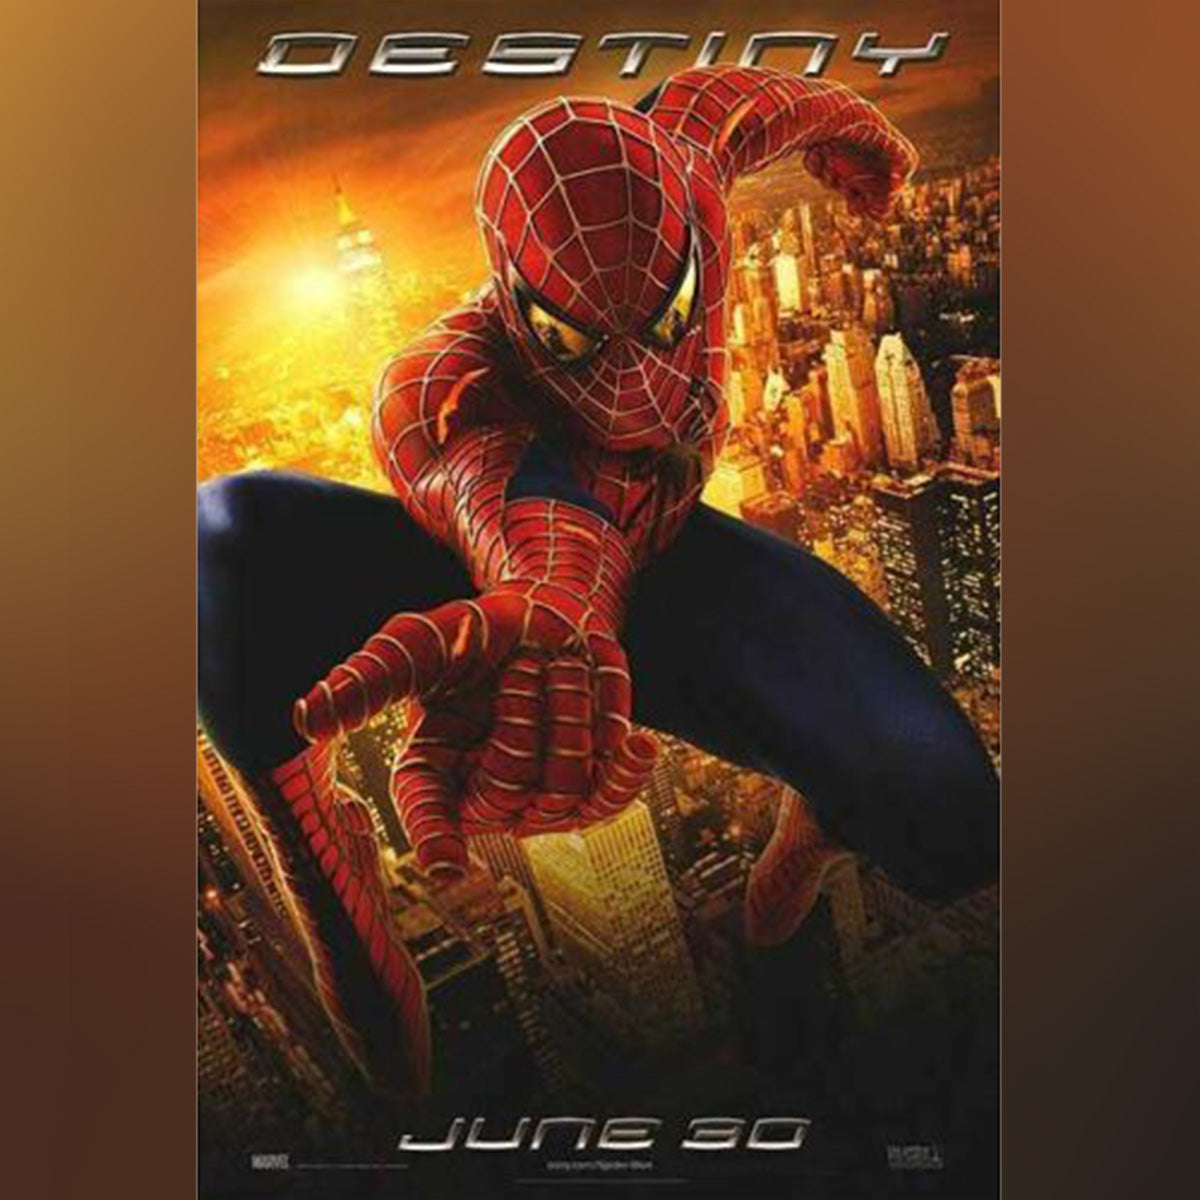 Original Movie Poster of Spider-man 2 (2004)